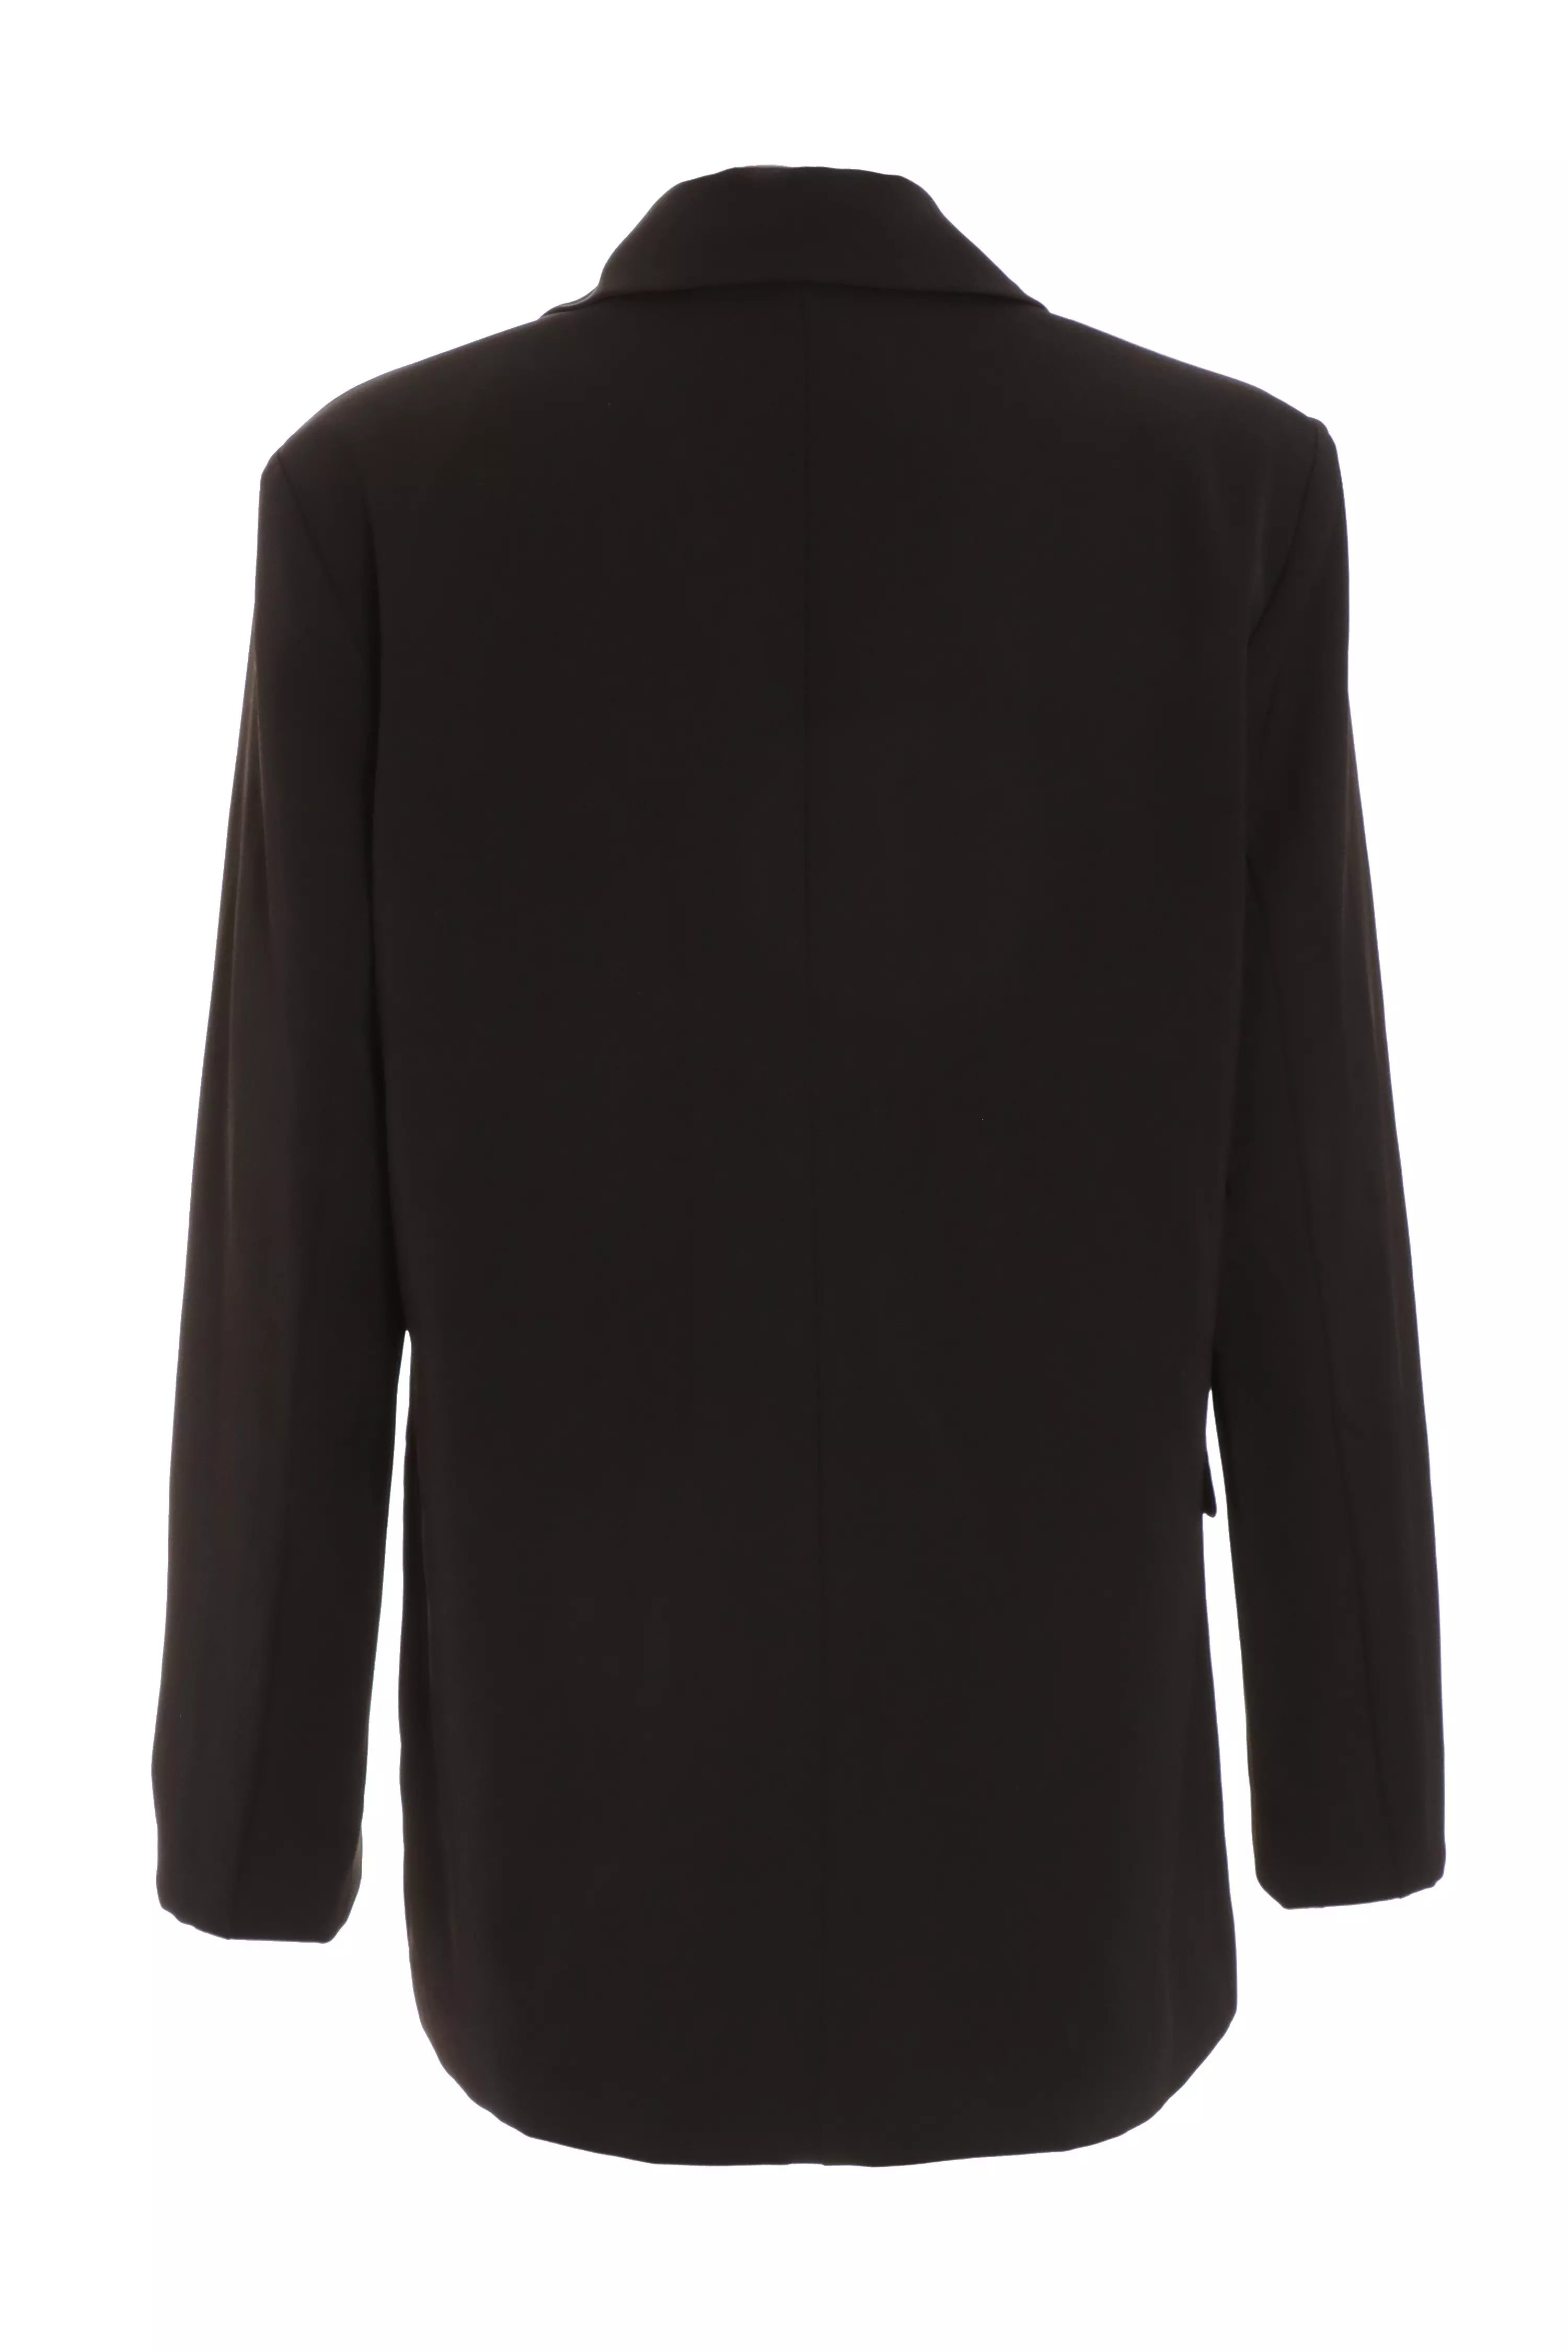 Black Oversized Tailored Blazer - QUIZ Clothing